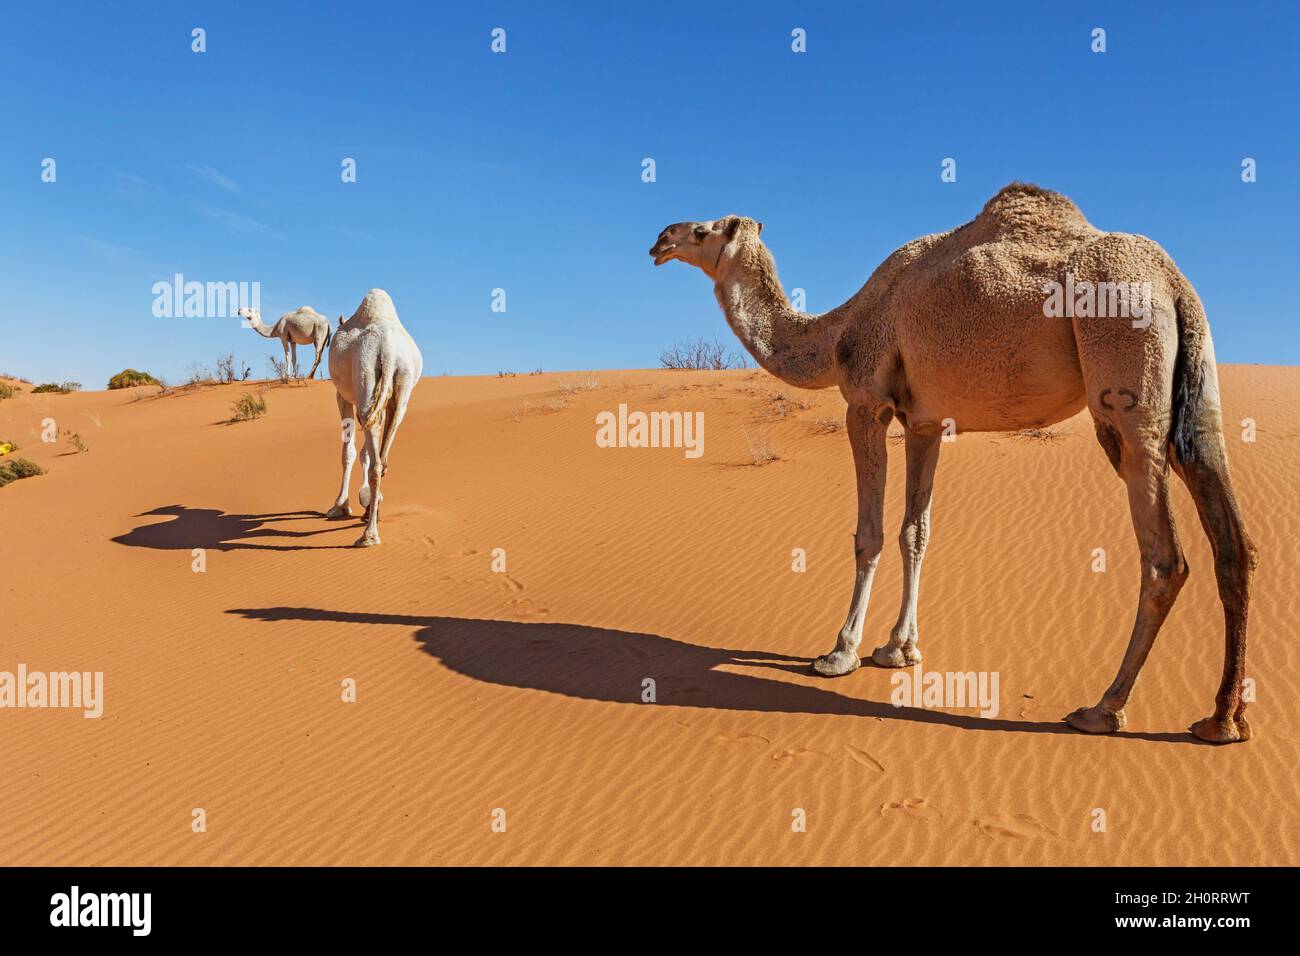 Three camels in the desert, Saudi Arabia Stock Photo